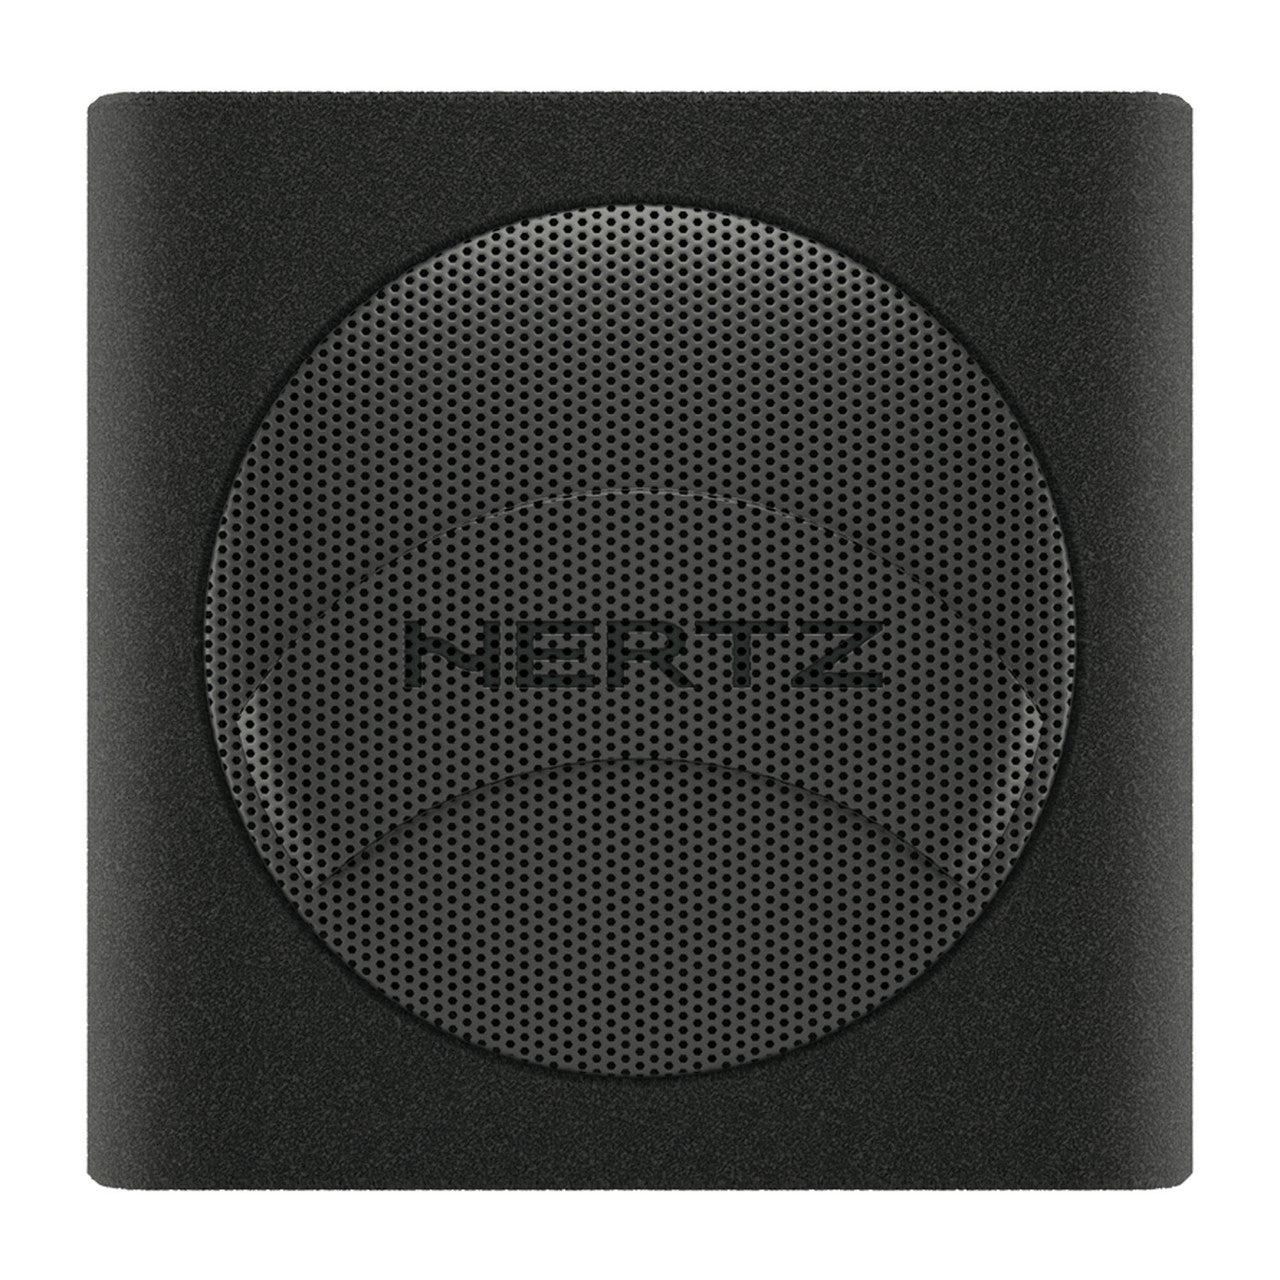 Hertz DBA 200.3 8" (200mm) Powered Sub Enclosure